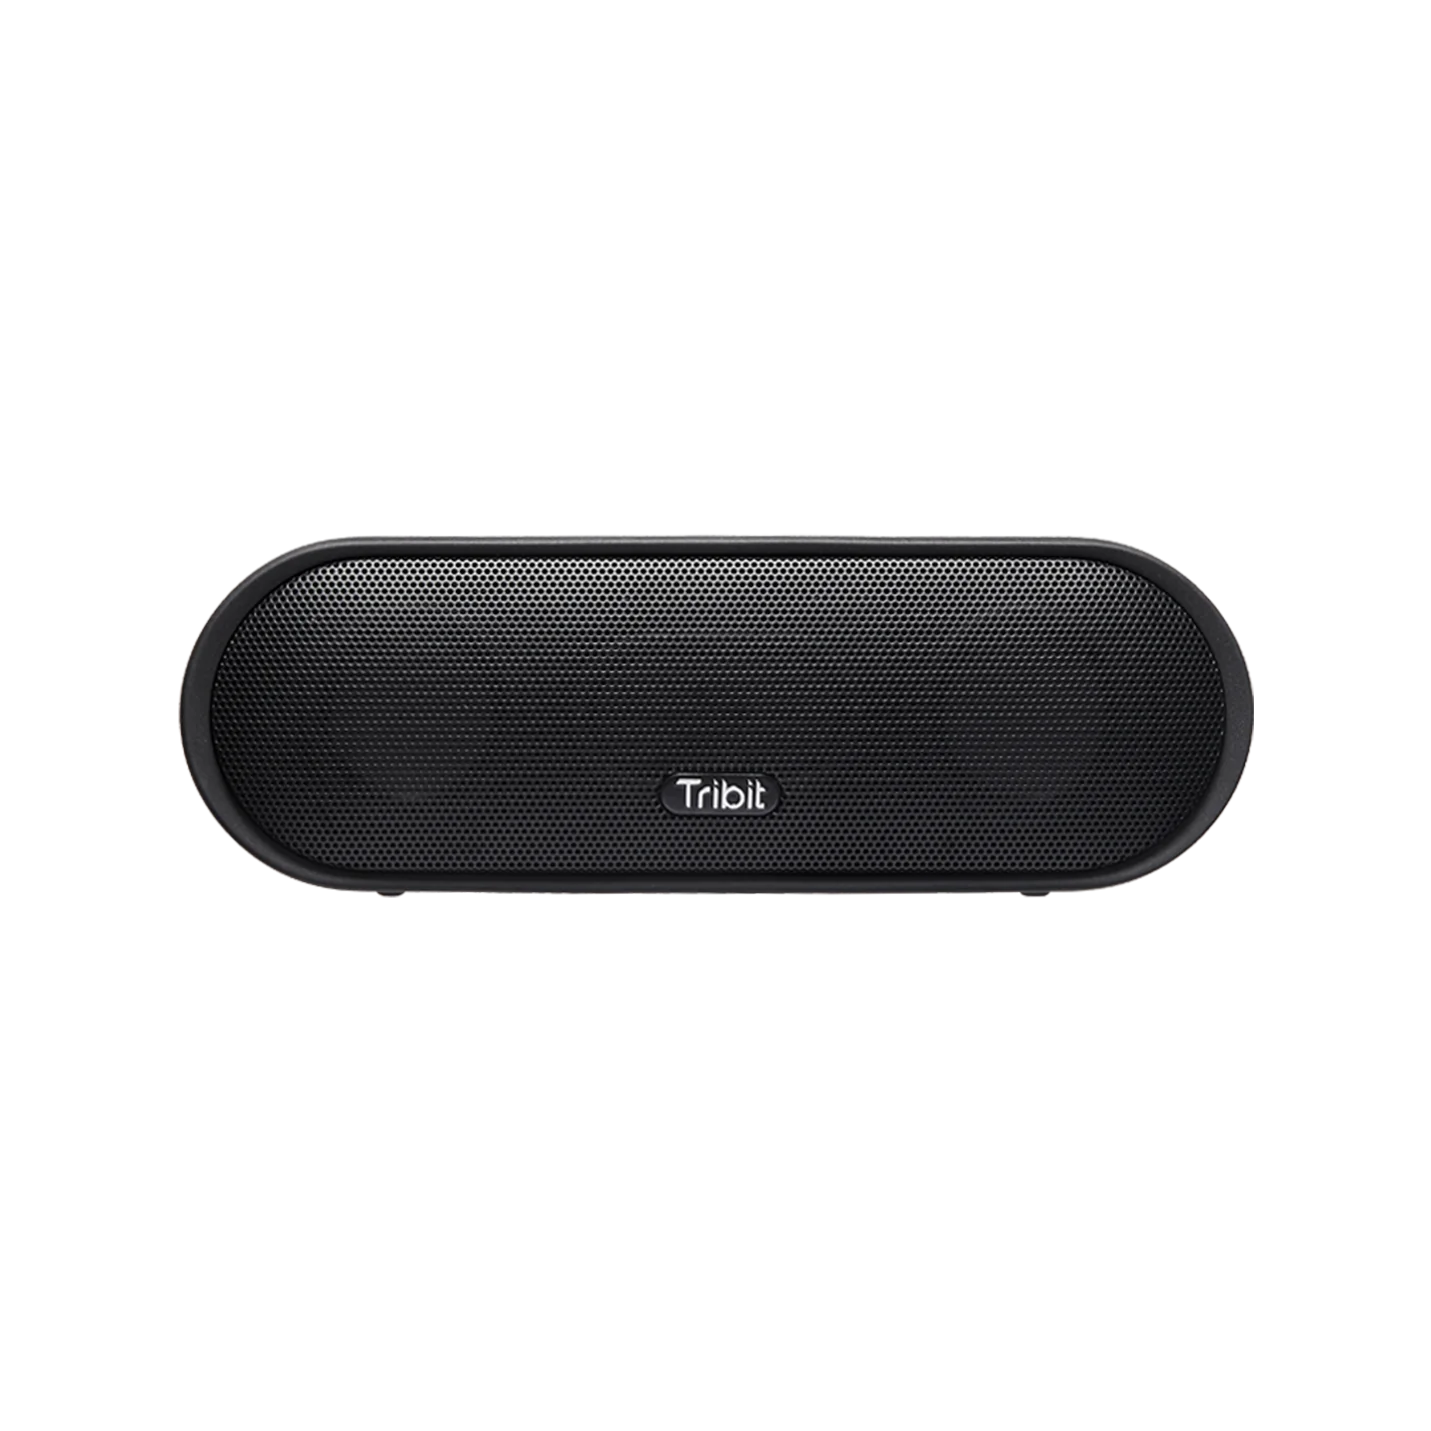 Tribit MaxSound Plus 24W Portable Wireless Speaker